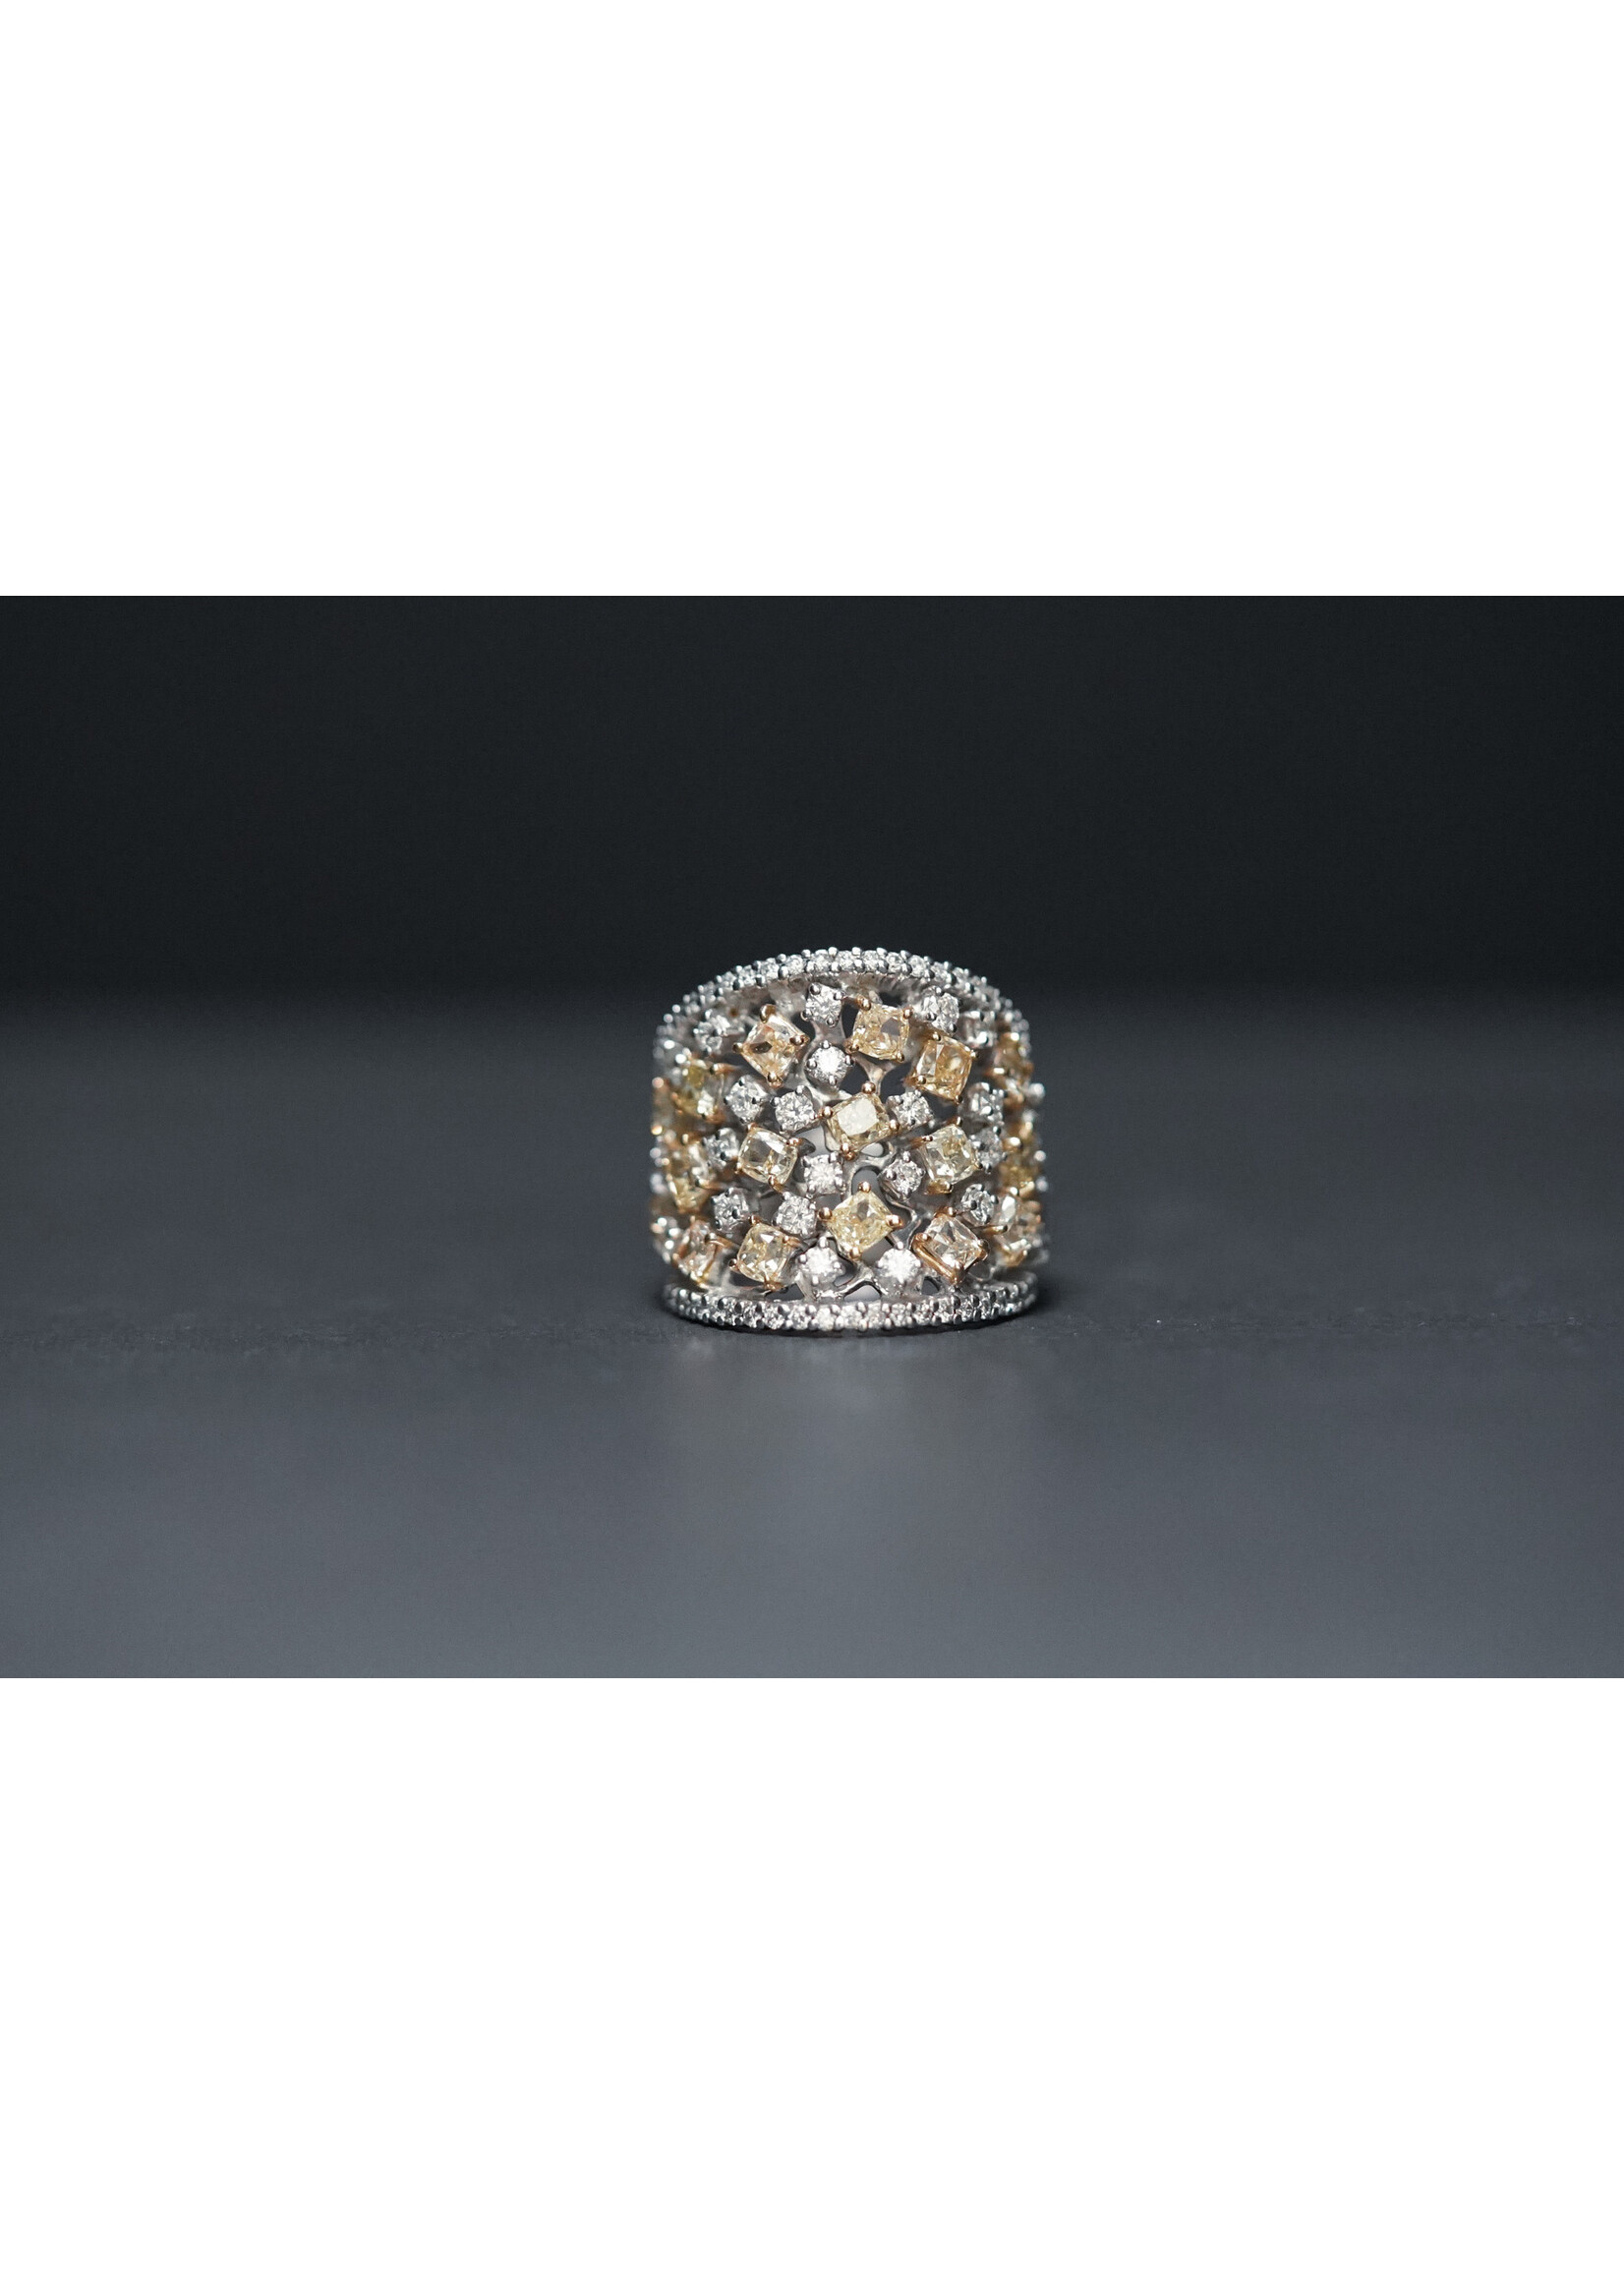 14KW 12.8g 5.82ctw Fancy Diamond Fashion Ring (size 6.5)